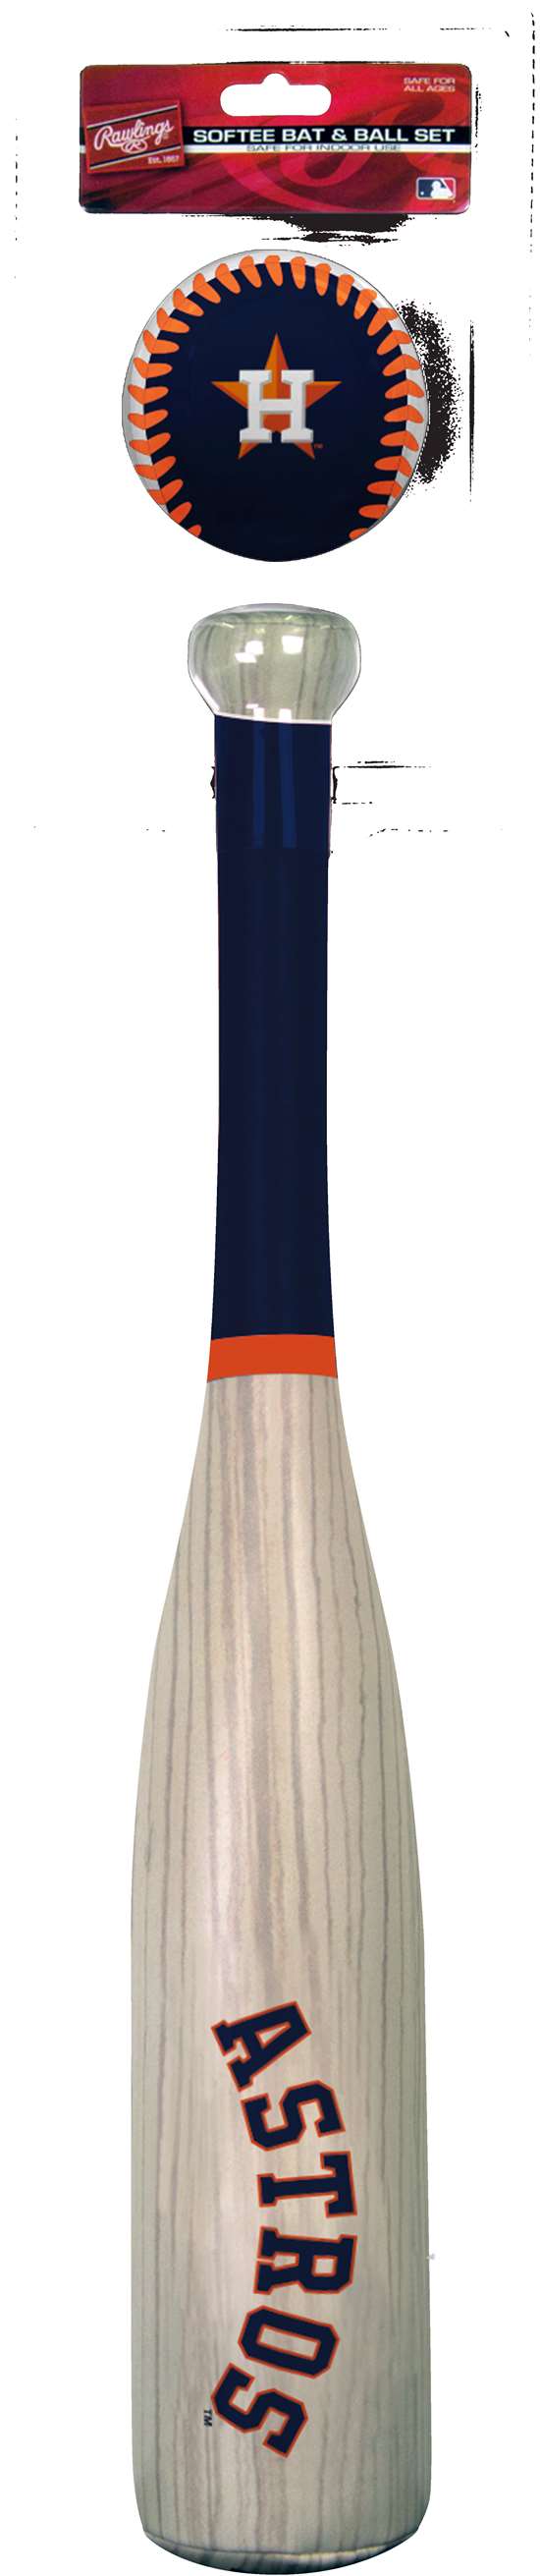 MLB Houston Astros Grand Slam Softee Baseball Bat and Ball Set (Wood Grain)